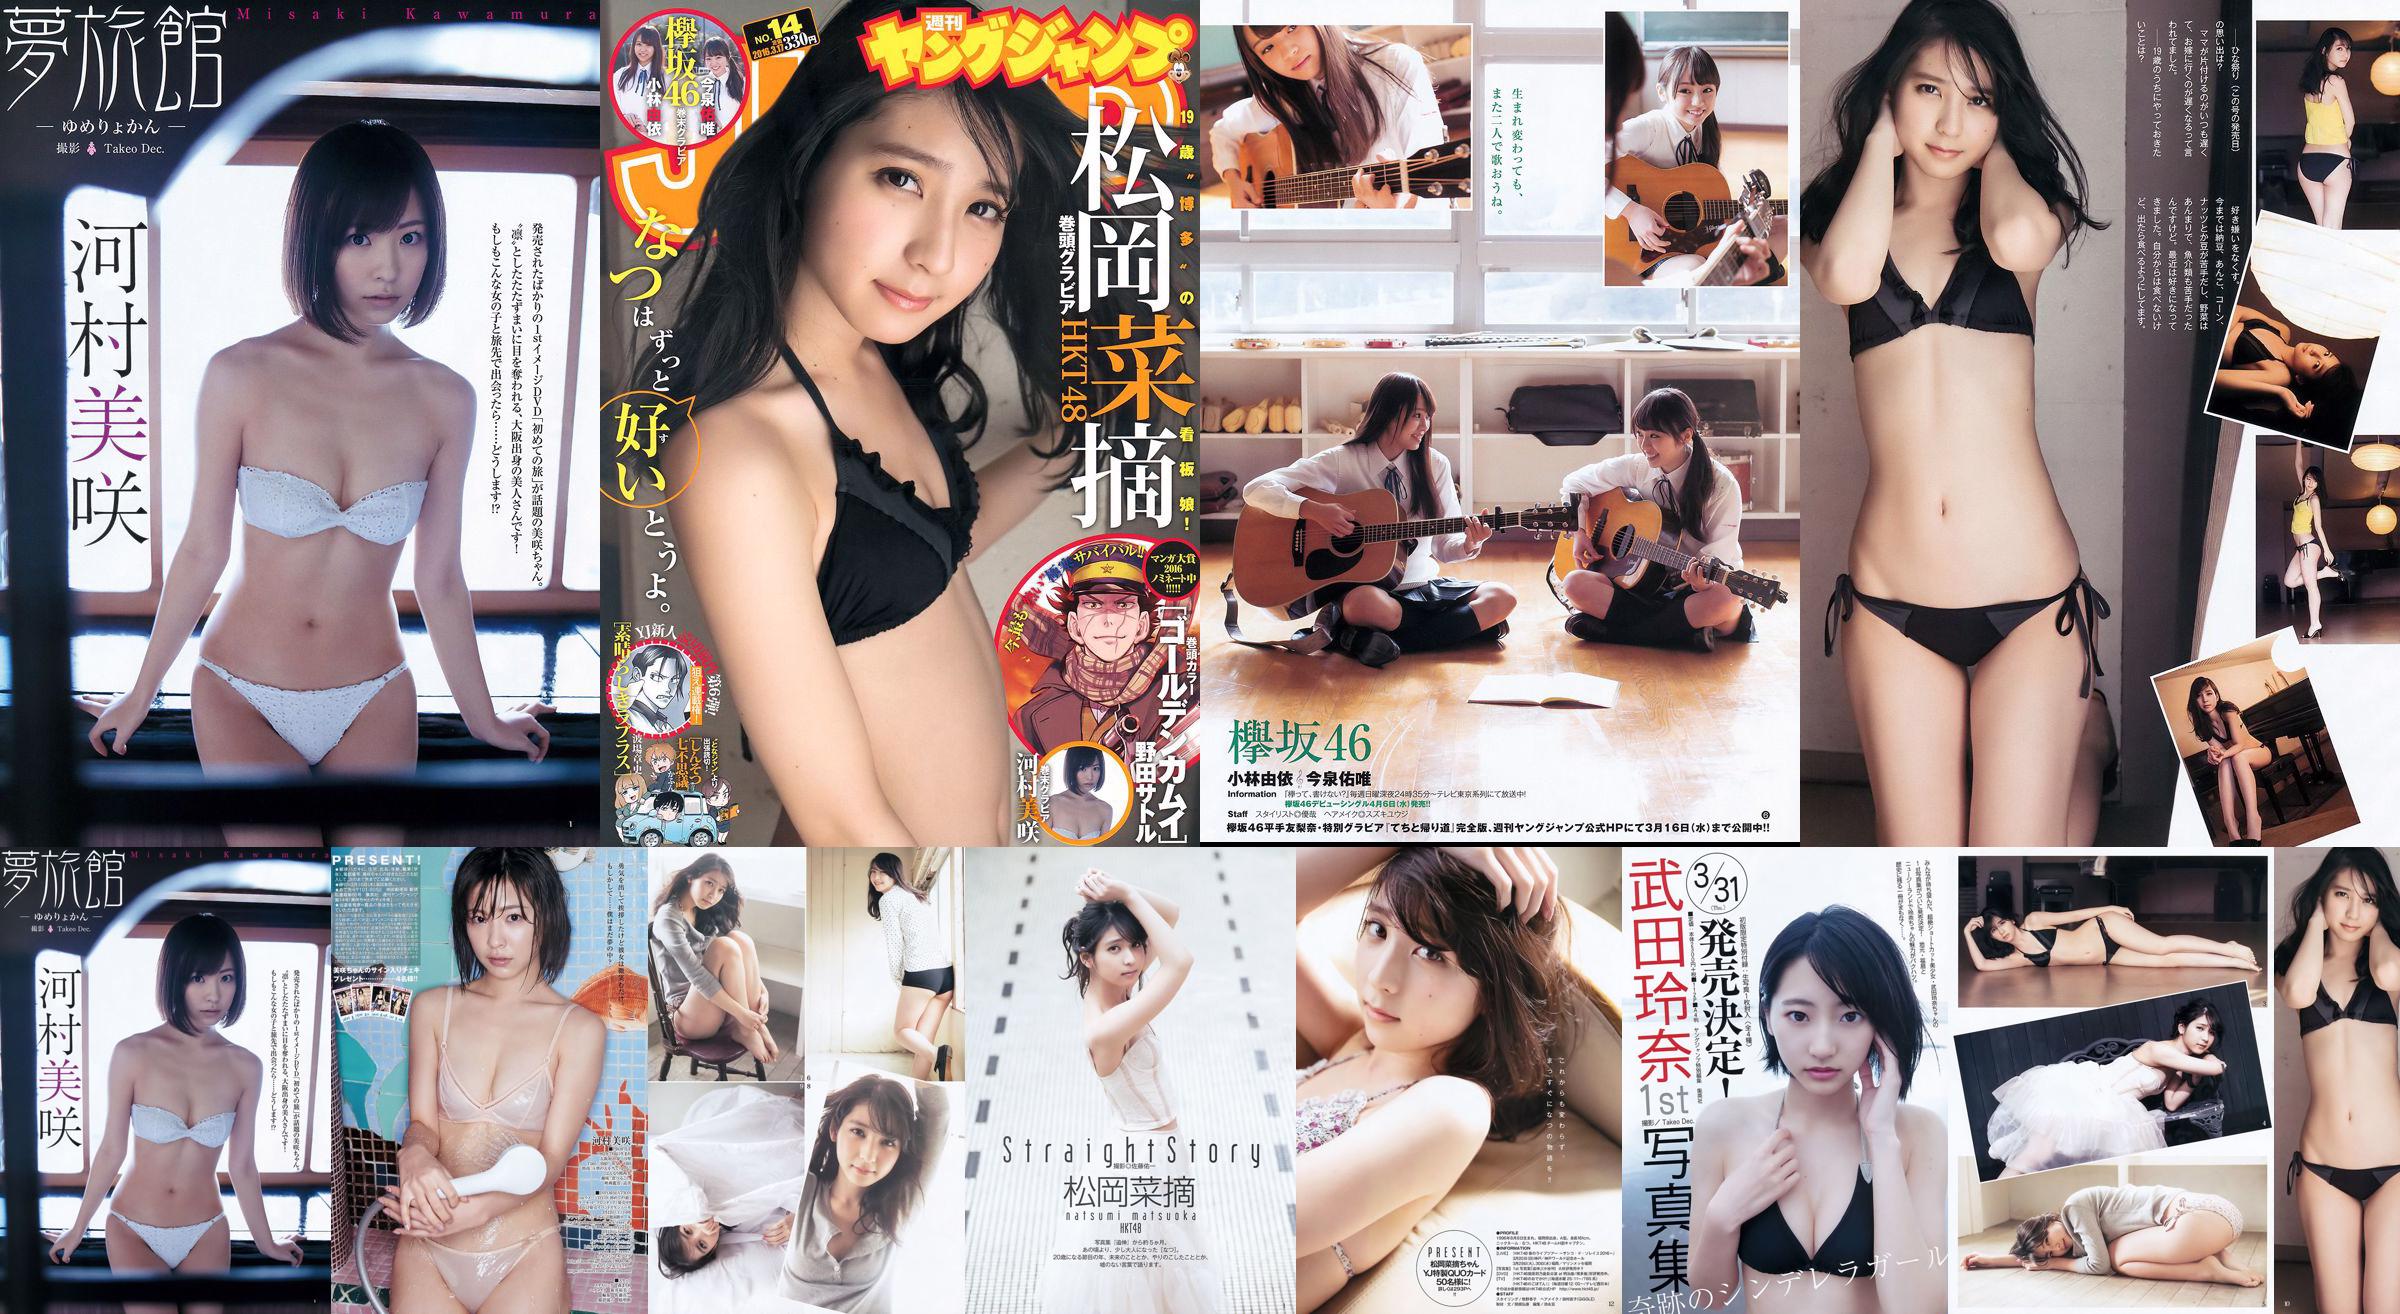 Pilihan Sayur Muraoka Yui Kobayashi Yui Imaizumi Misaki Kawamura [Lompat Muda Mingguan] Majalah Foto No. 14 2016 No.980c1e Halaman 4